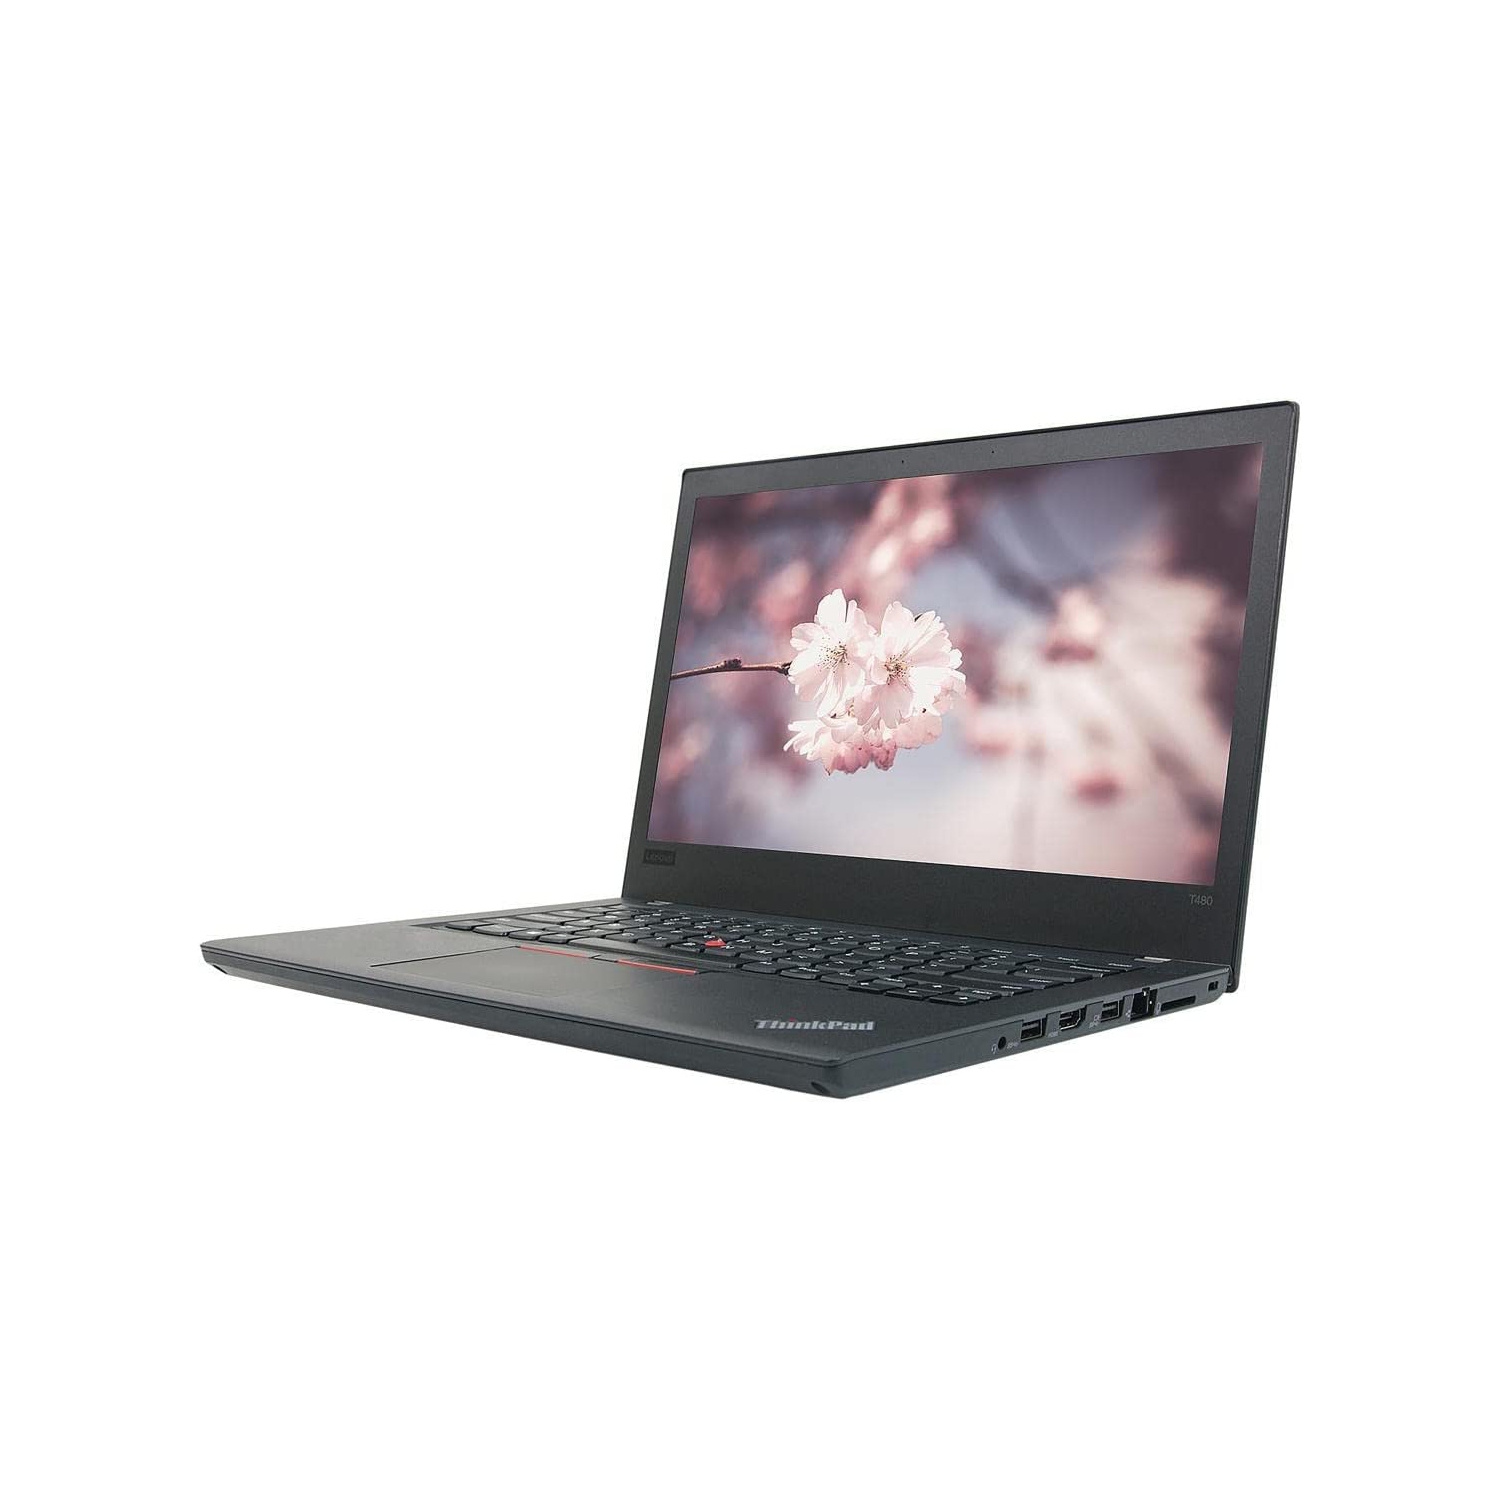 Refurbished (Excellent) - Lenovo ThinkPad T480 Ultrabook - Intel Core i5-7300, , 8GB, 512GB SSD,14.0" TFT, Windows 10 PRO - 1 Year Warranty